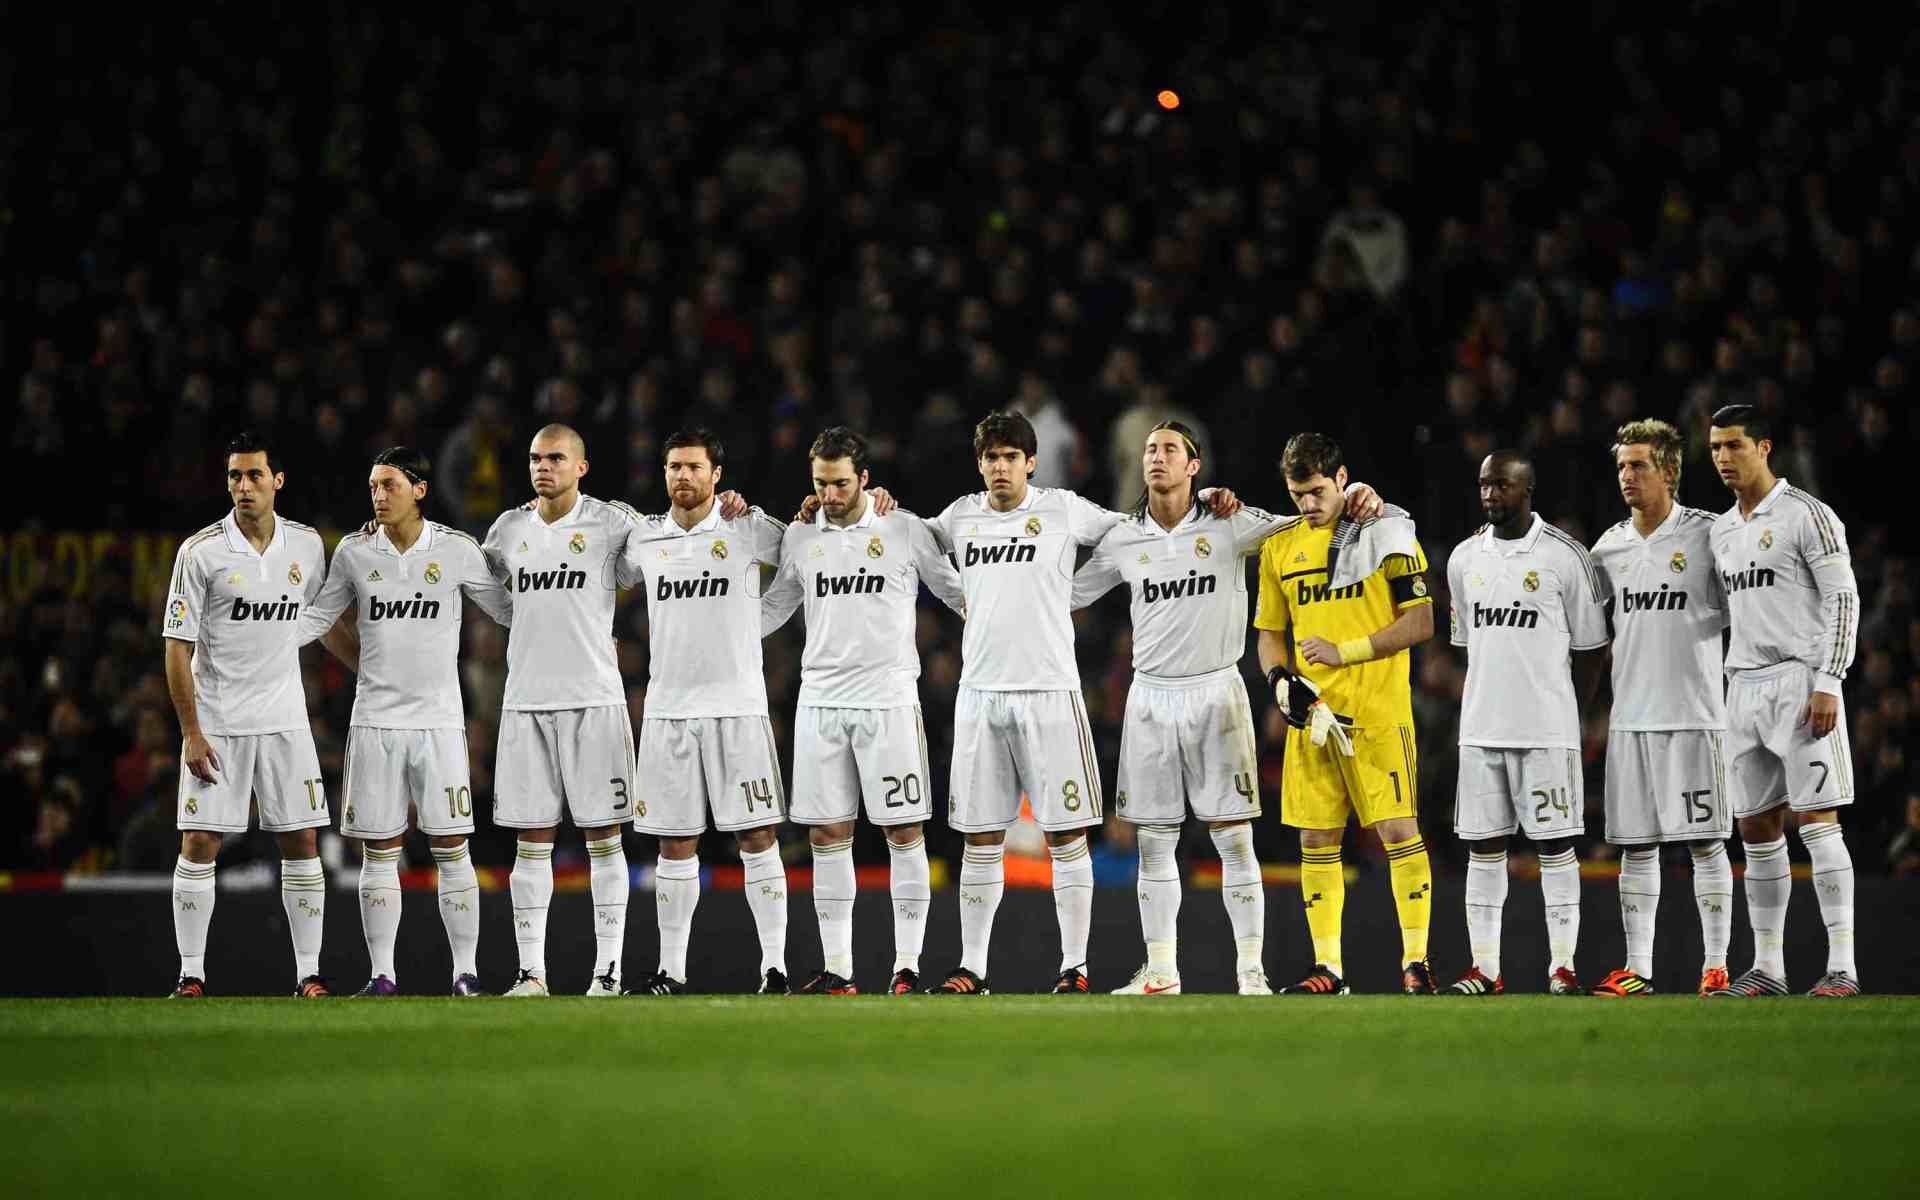 Real Madrid Wallpaper Image